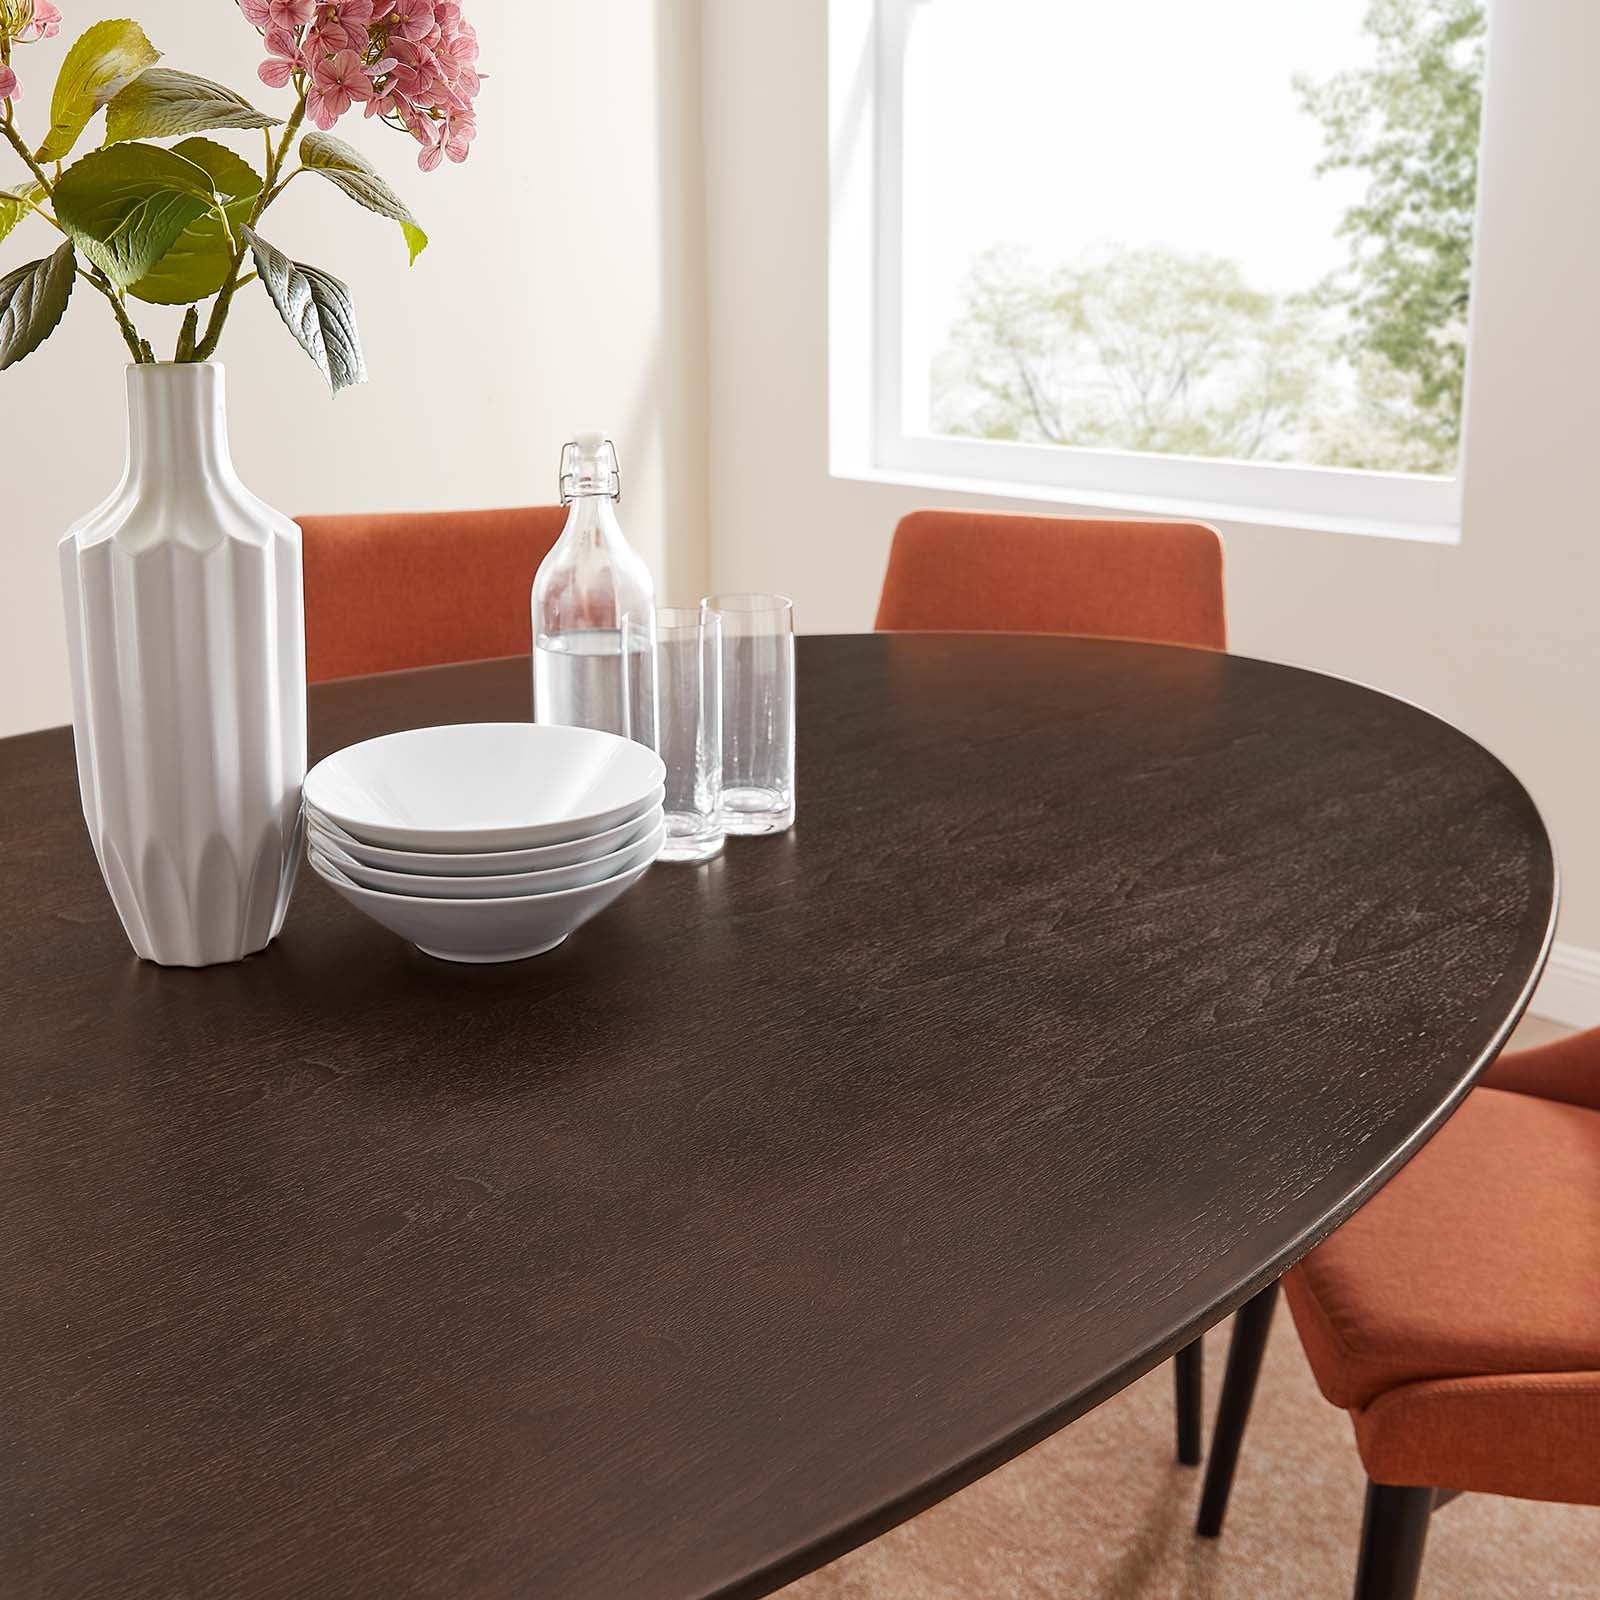 Lippa 78" Wood Oval Dining Table